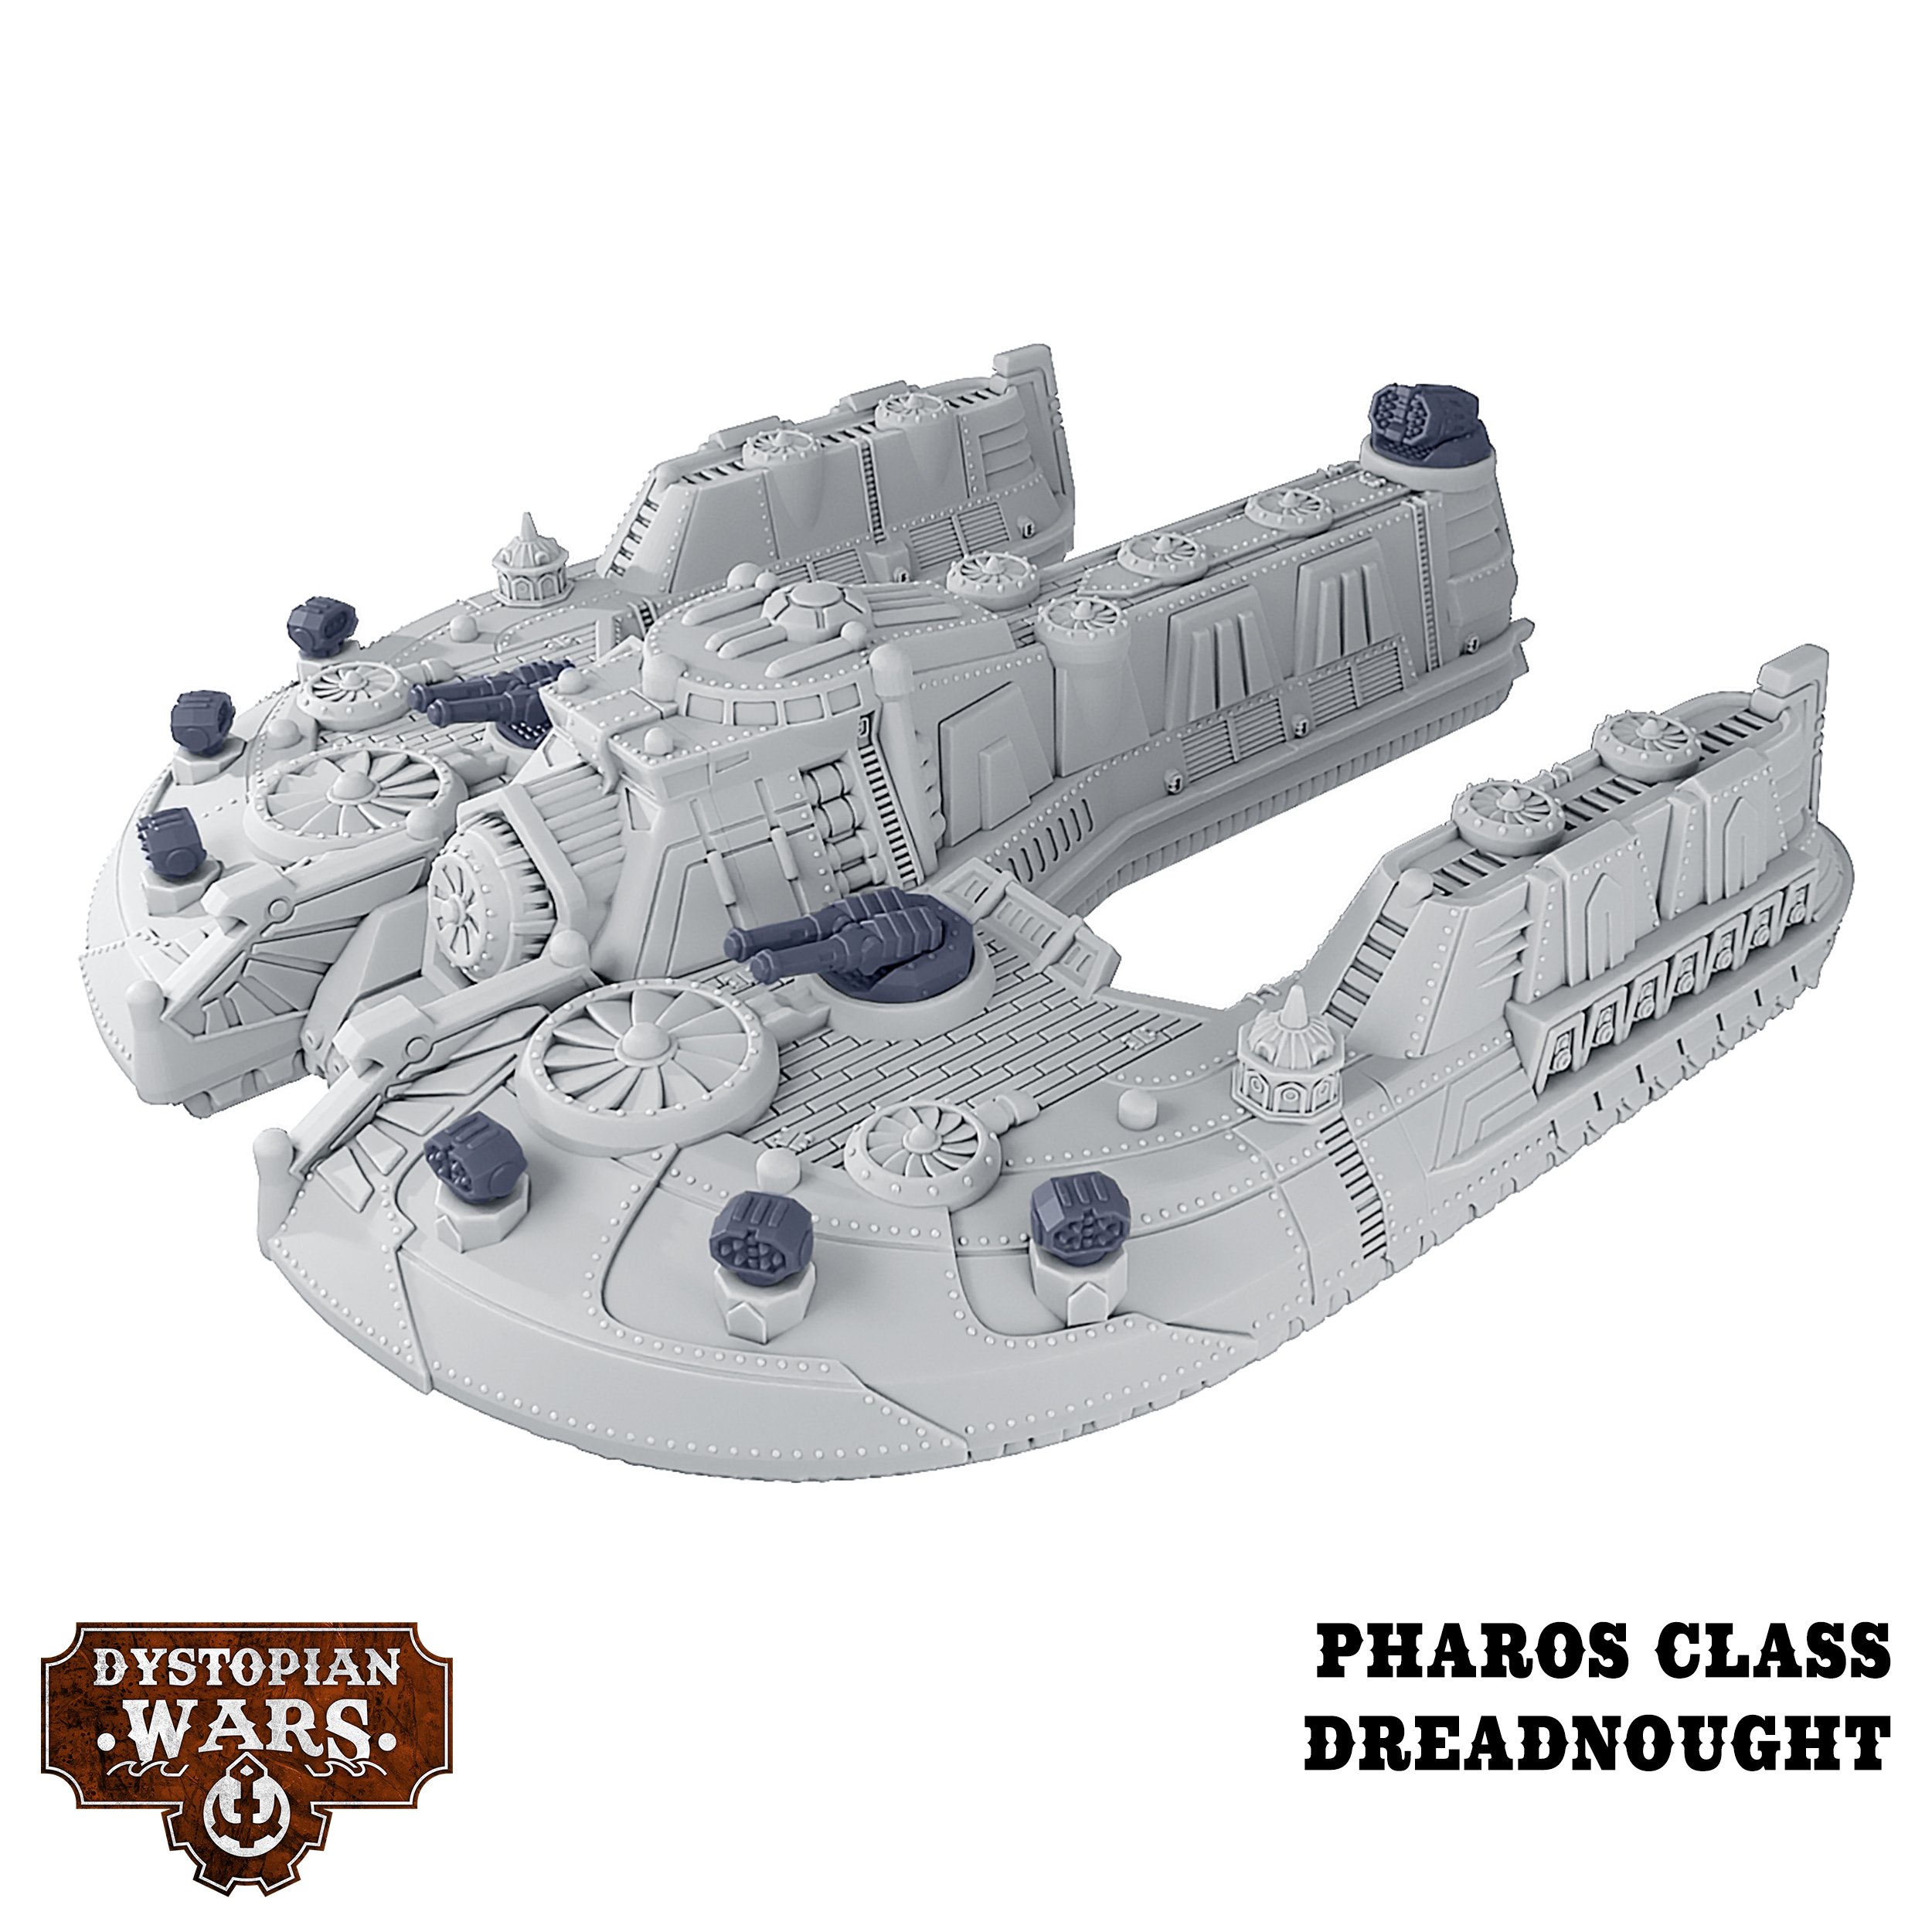 Pharos Class Dreadnought - Dystopian Wars